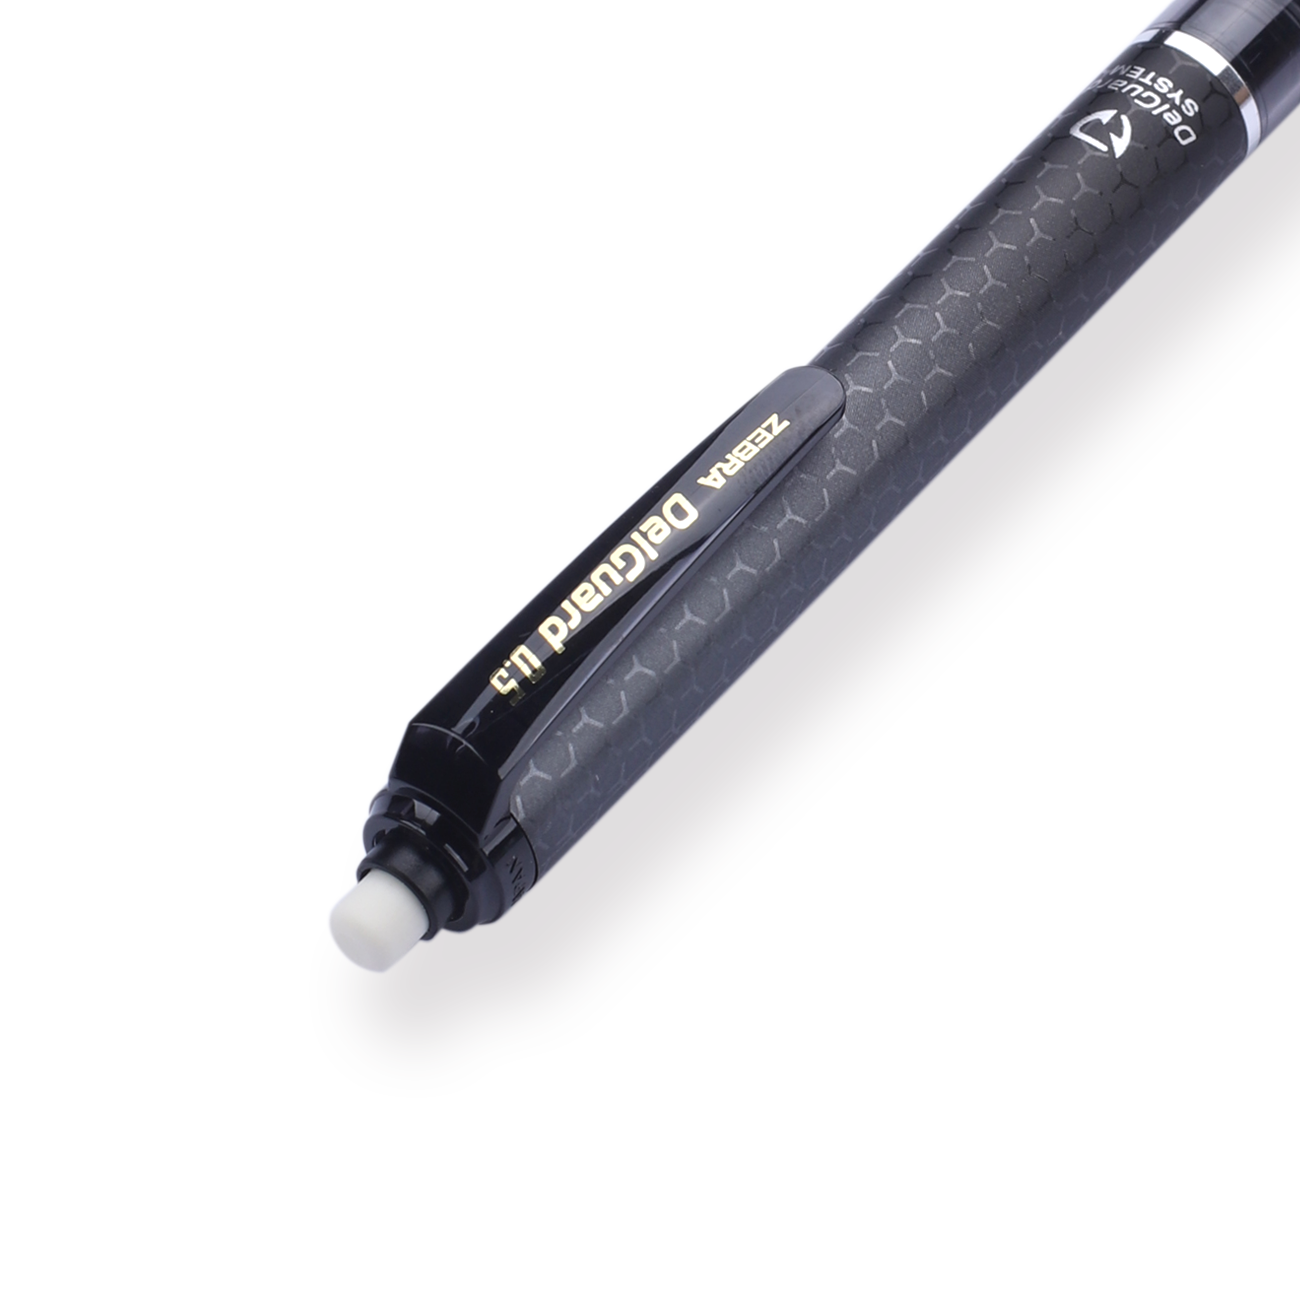 Zebra DelGuard Mechanical Pencil Set - 0.5 mm - Black